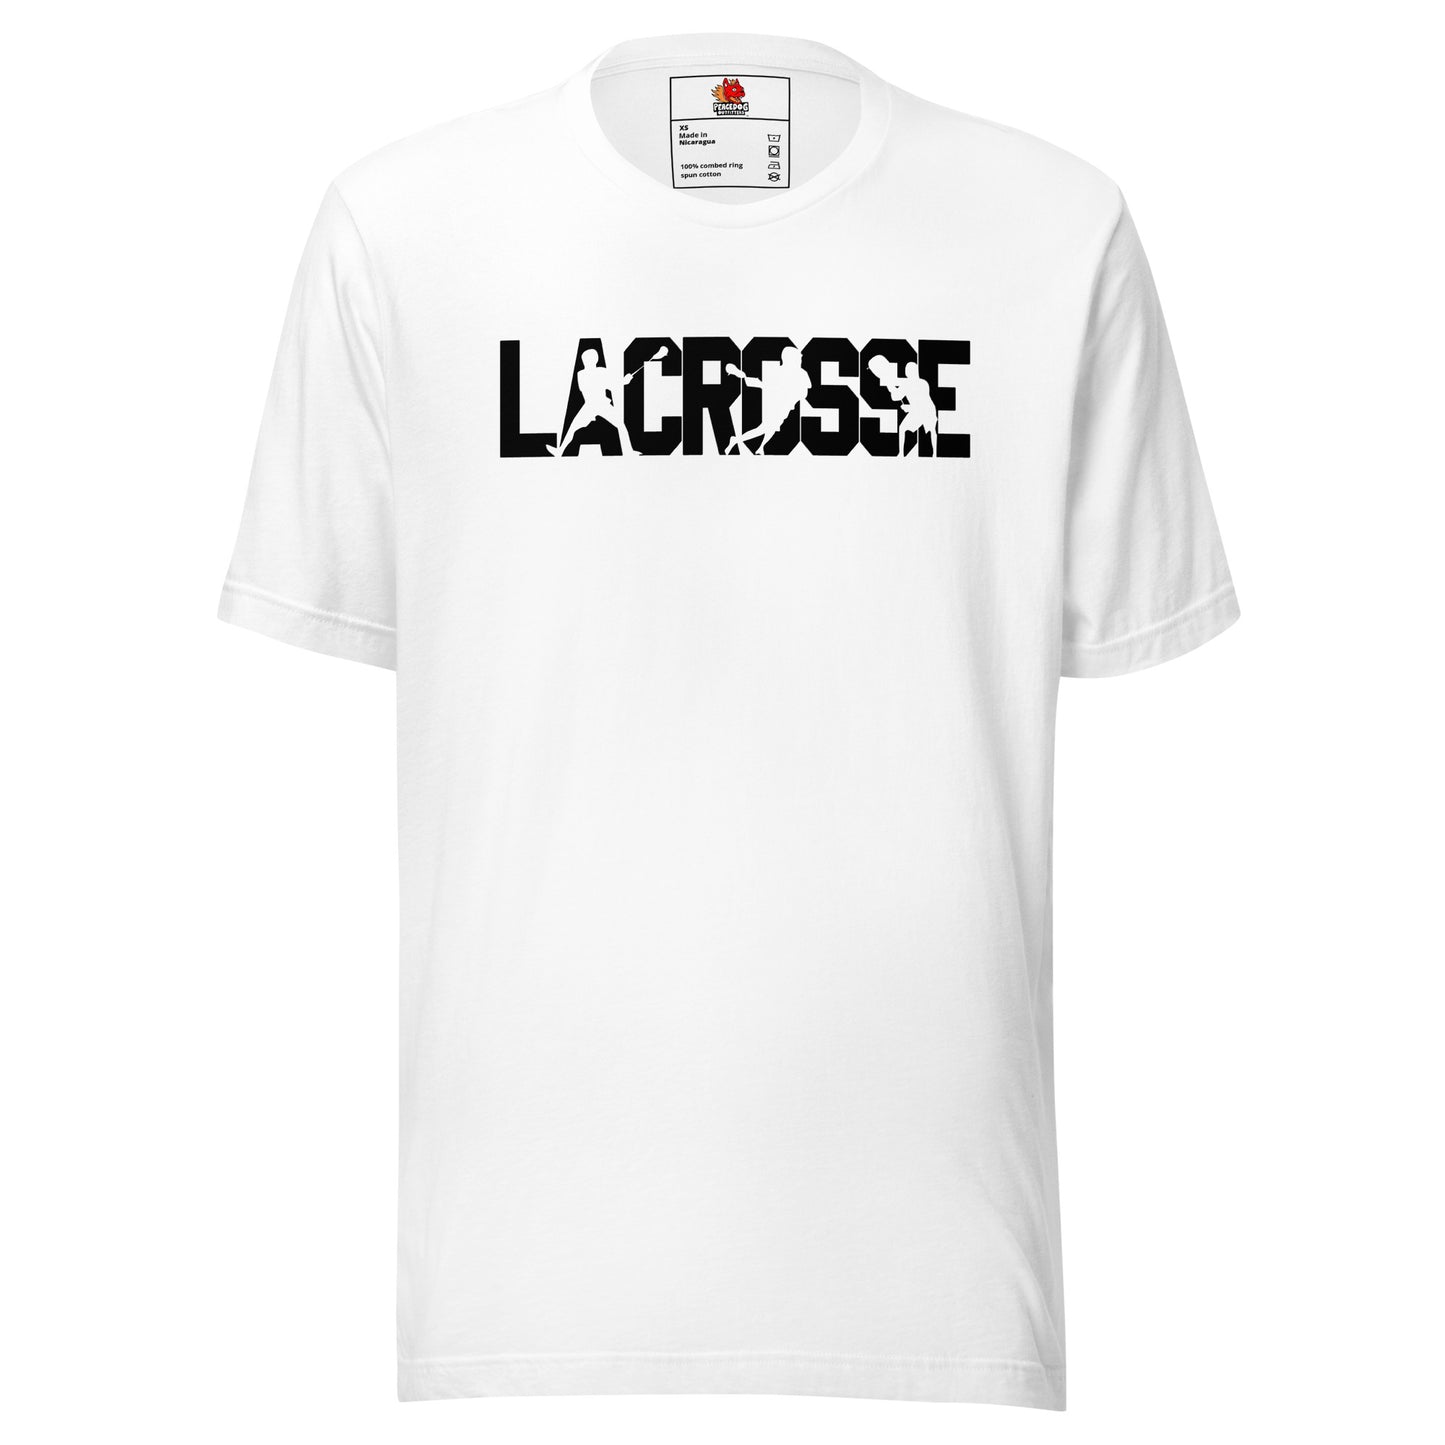 Lacrosse T-shirt